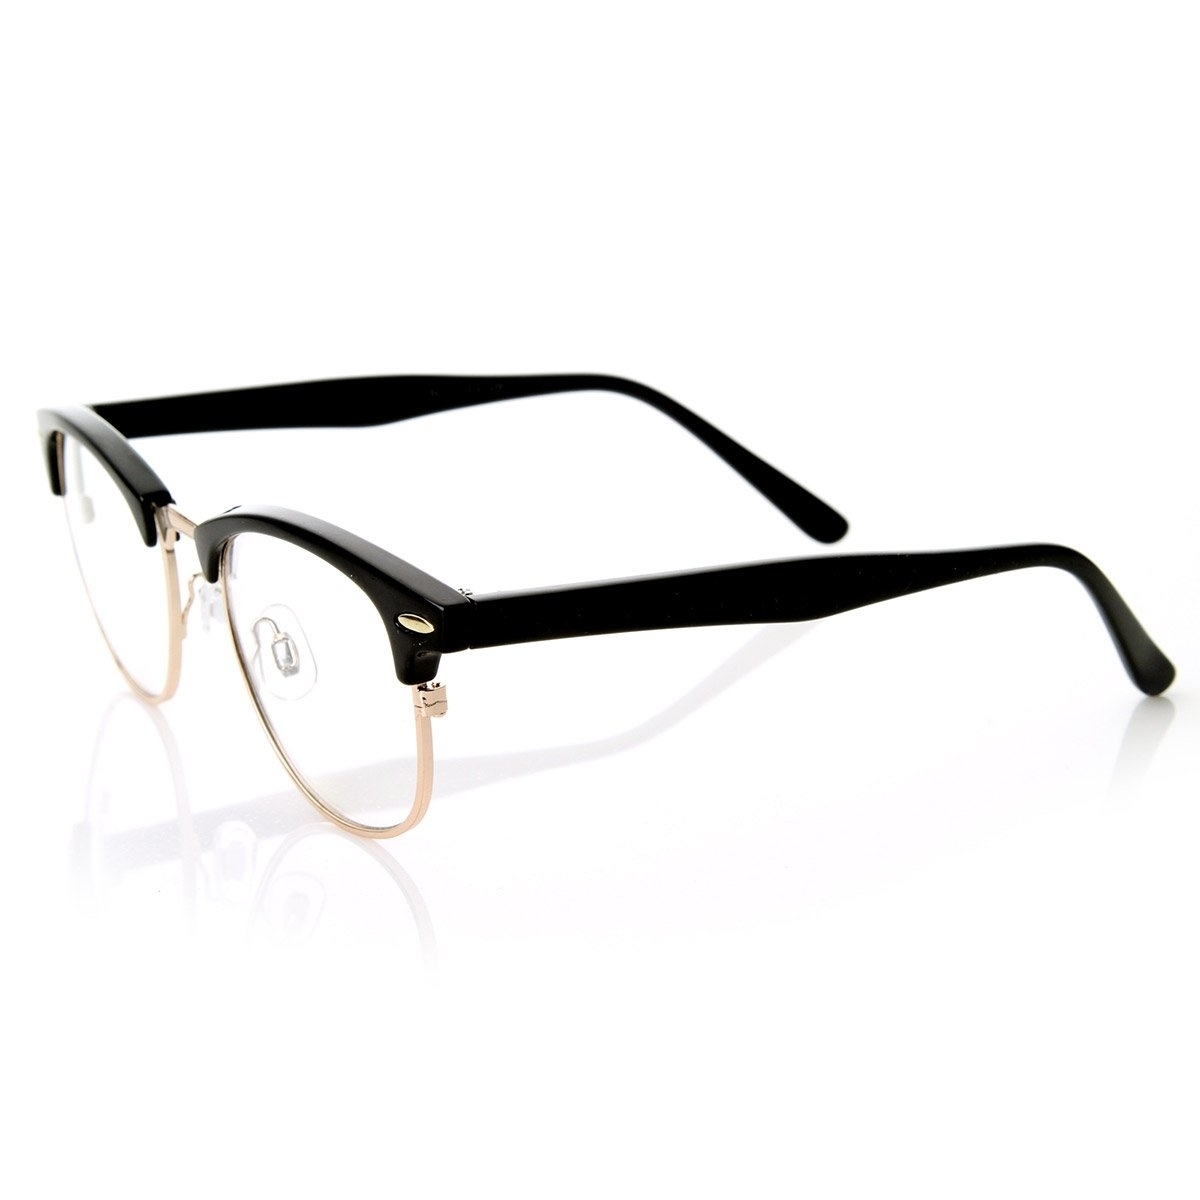 Optical Quality Horned Rim Clear Lens RX'able Half Frame Horn Rimmed Glasses - Tortoise-Gold